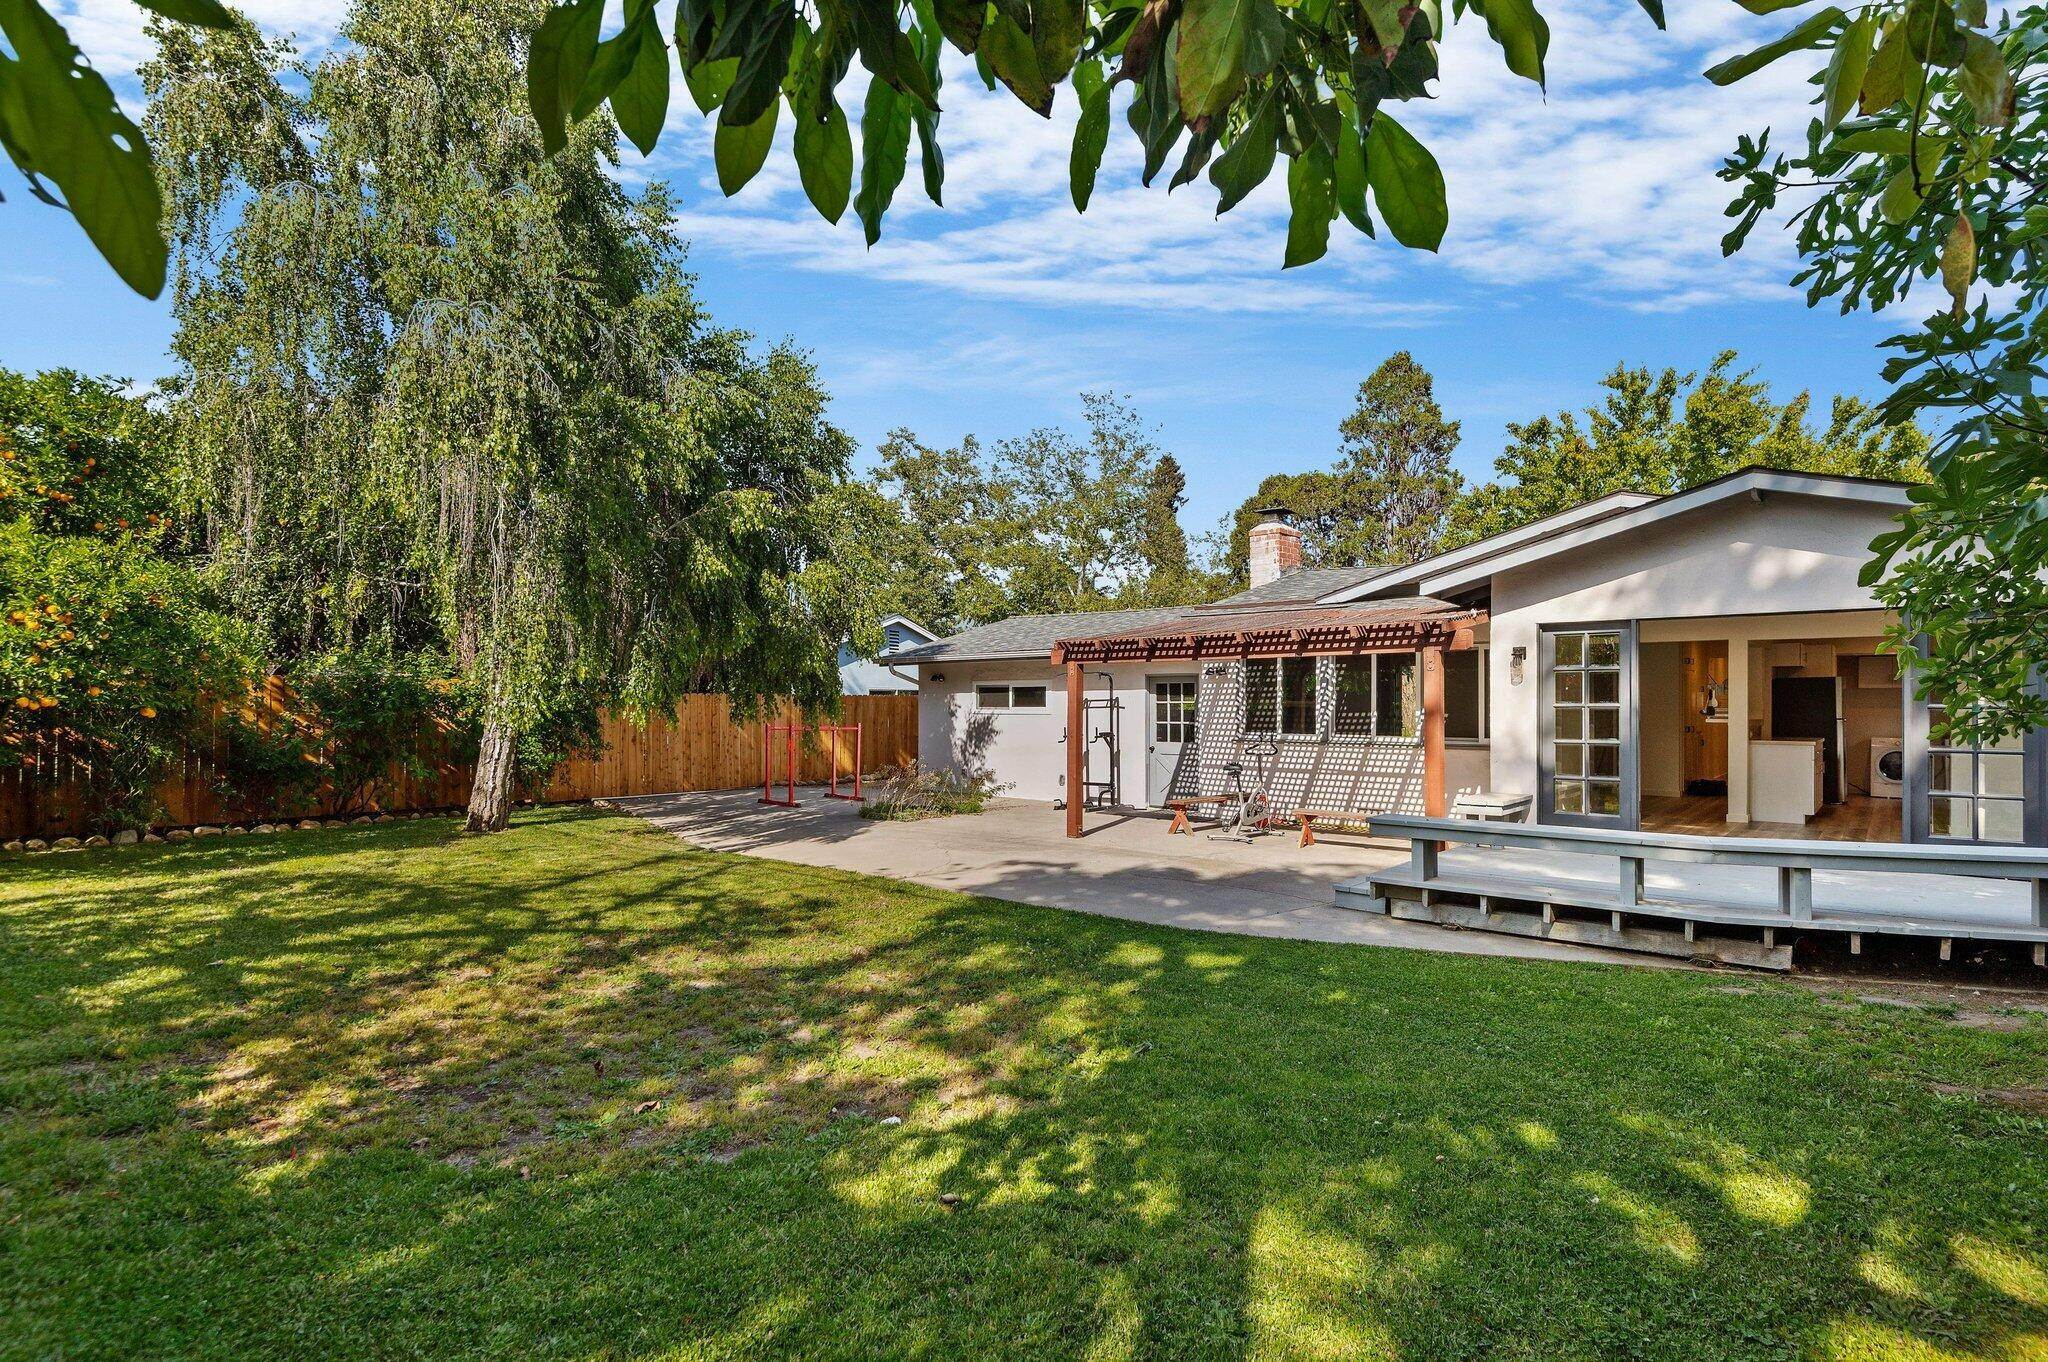 19. Estate for Sale at 361 Apple Grove Lane Santa Barbara, California 93105 United States